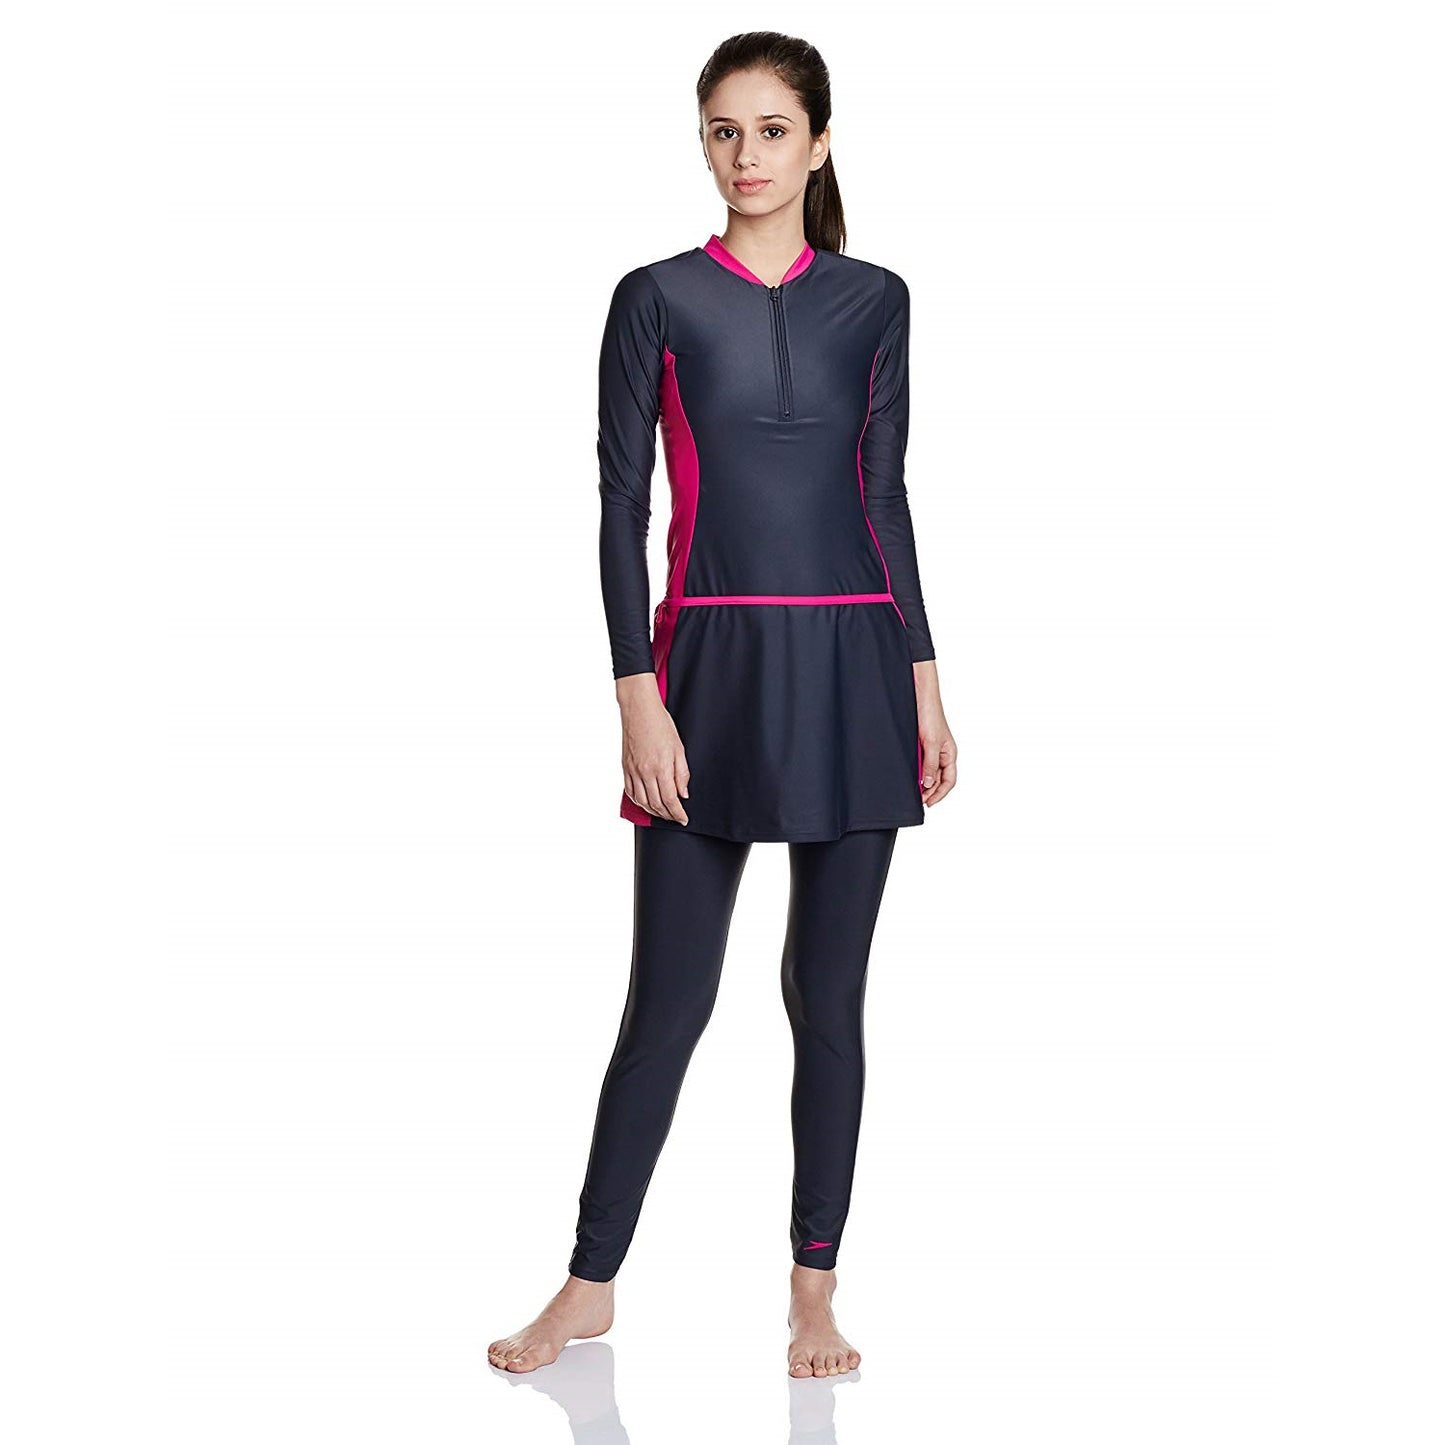 Speedo Female Swimwear 2 Piece Full Body Suit (Oxid Grey/Electric Pink) - Best Price online Prokicksports.com